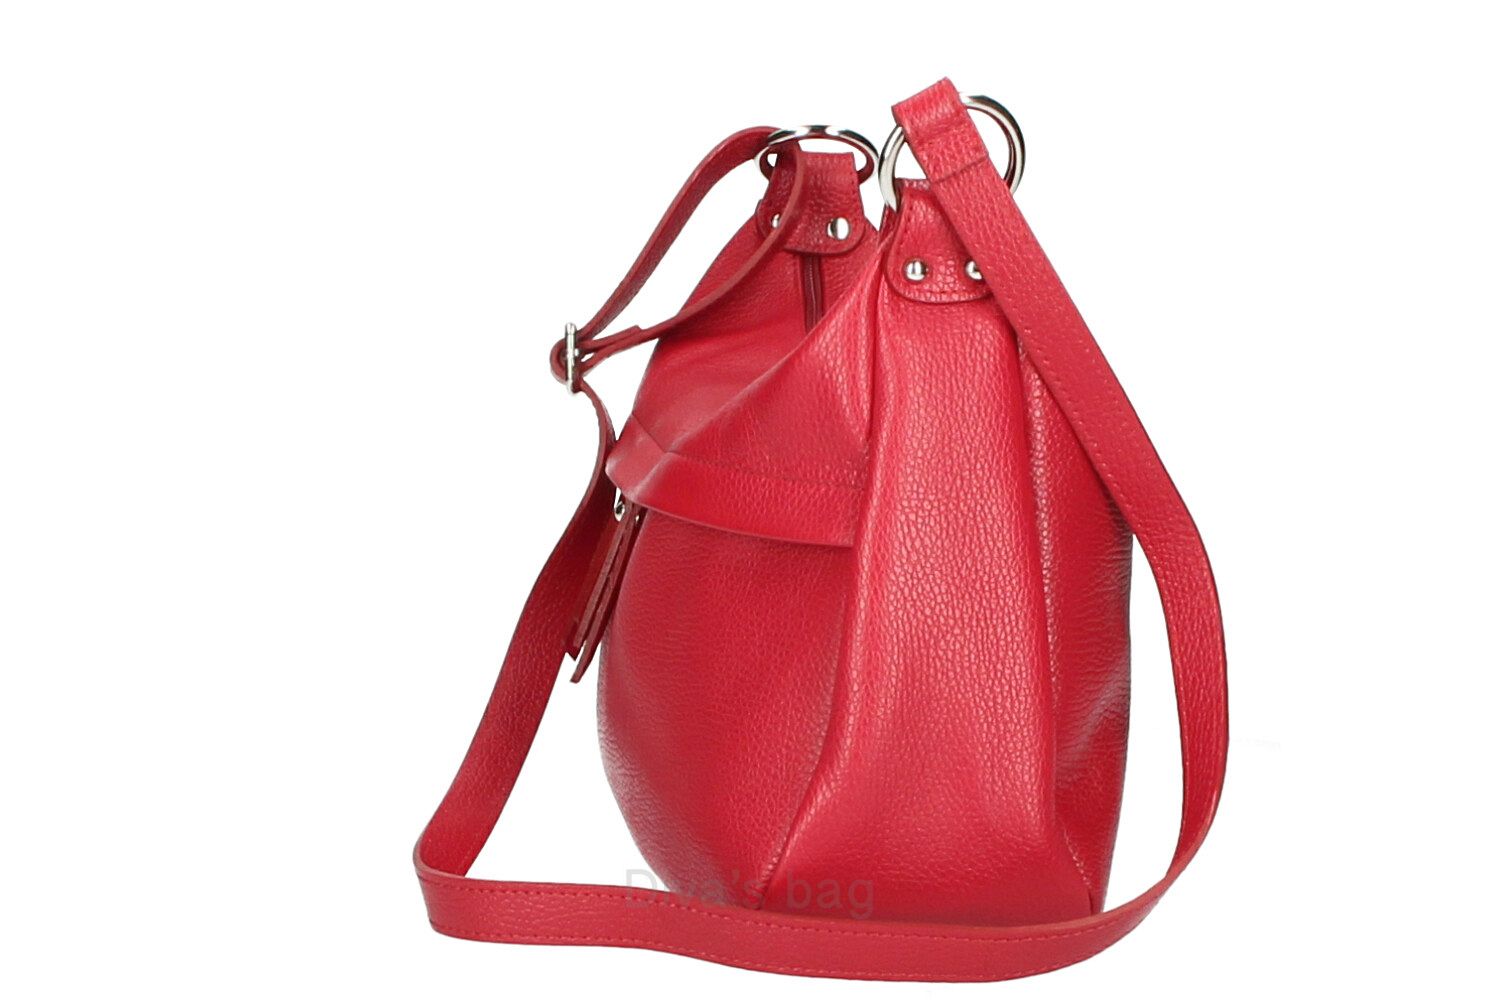 Donata - Genuine Leather Handbag